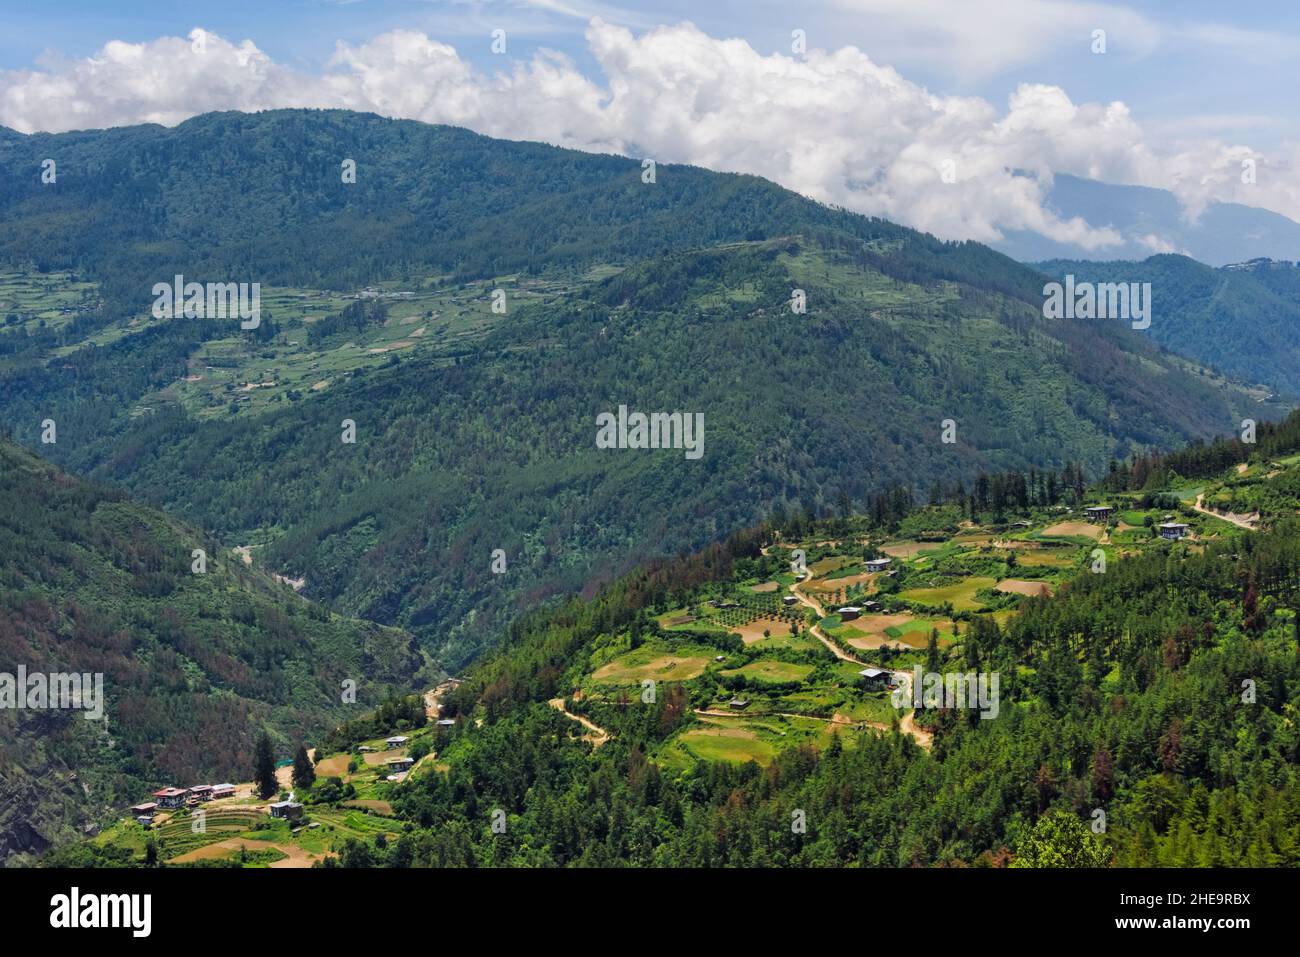 Village and farmland in the Himalayas, Thimphu, Bhutan Stock Photo